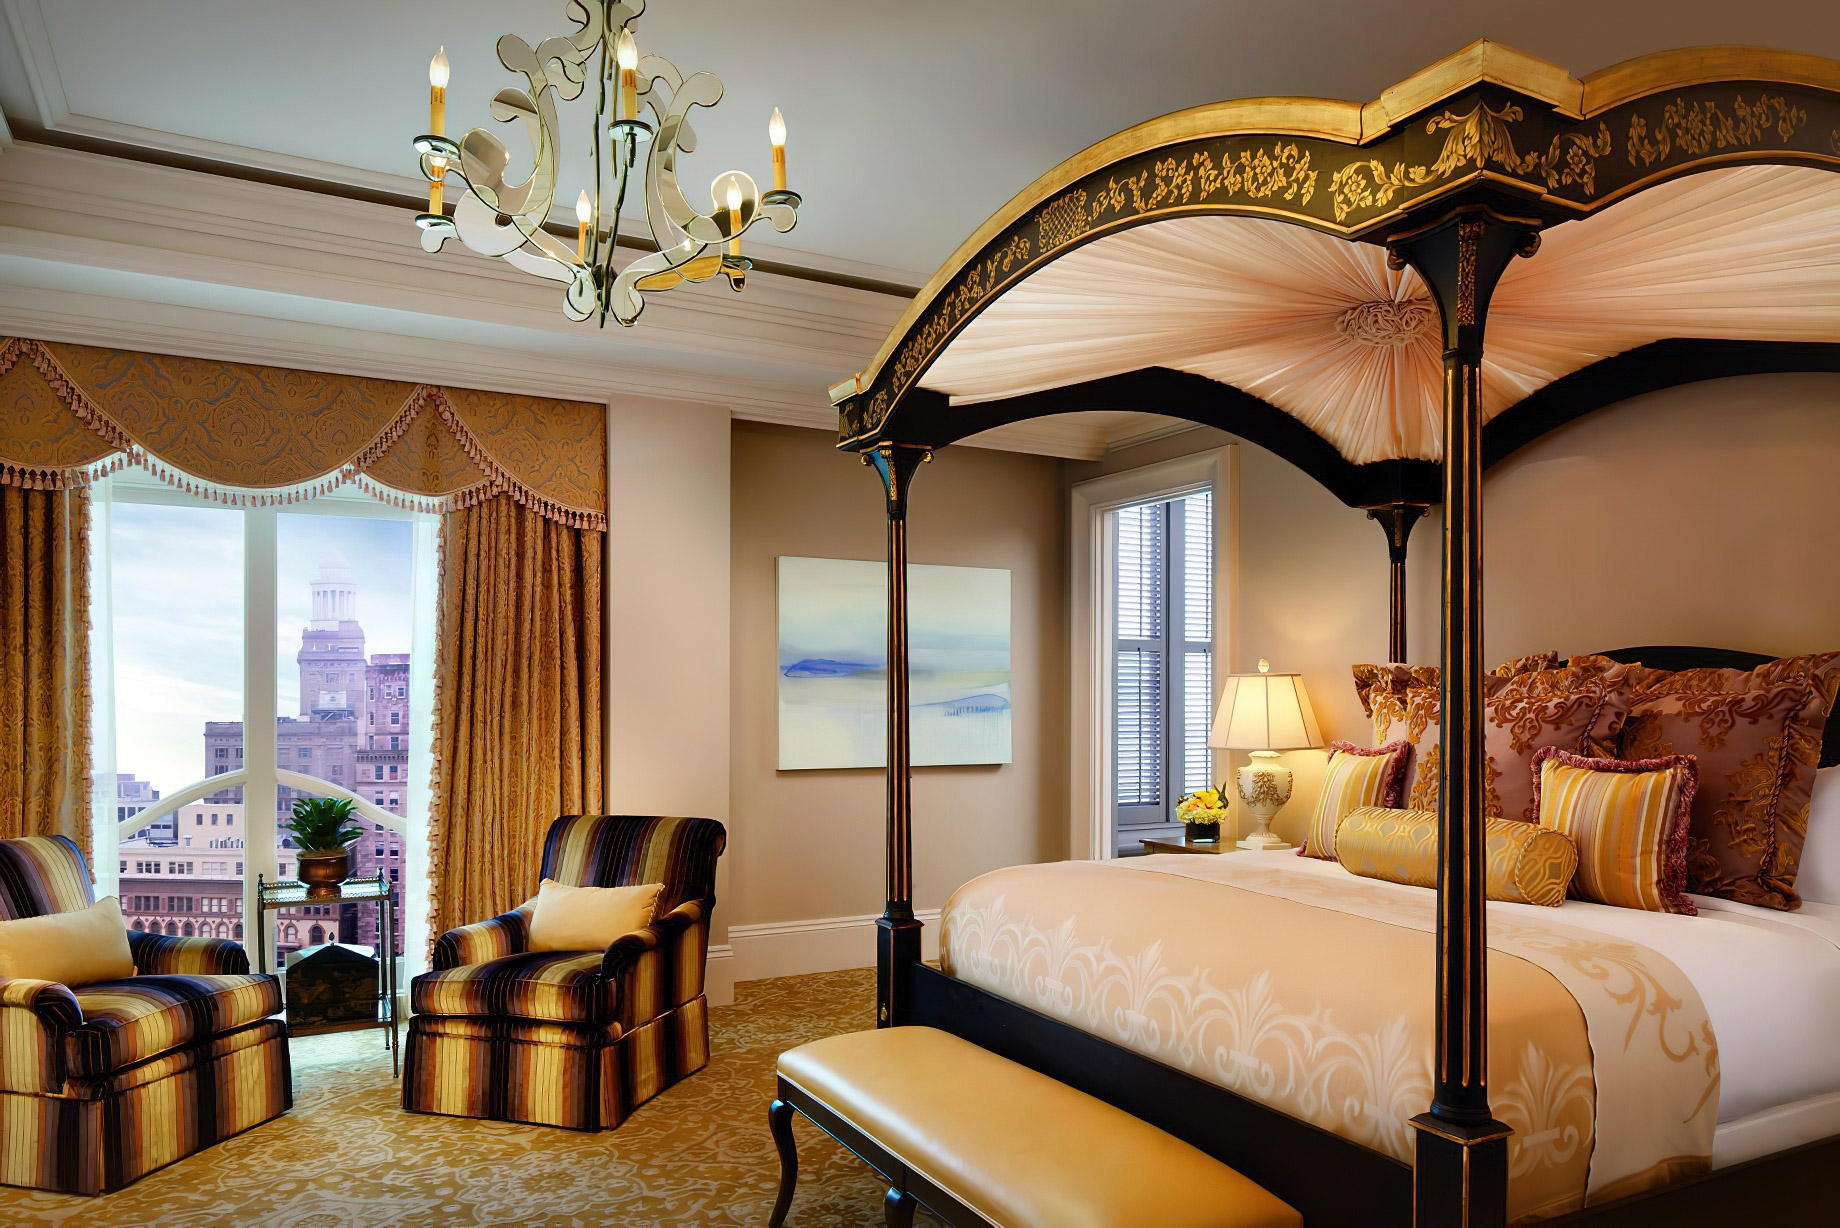 The Ritz-Carlton, New Orleans Hotel - New Orleans, LA, USA - Ritz-Carlton Suite Bedroom